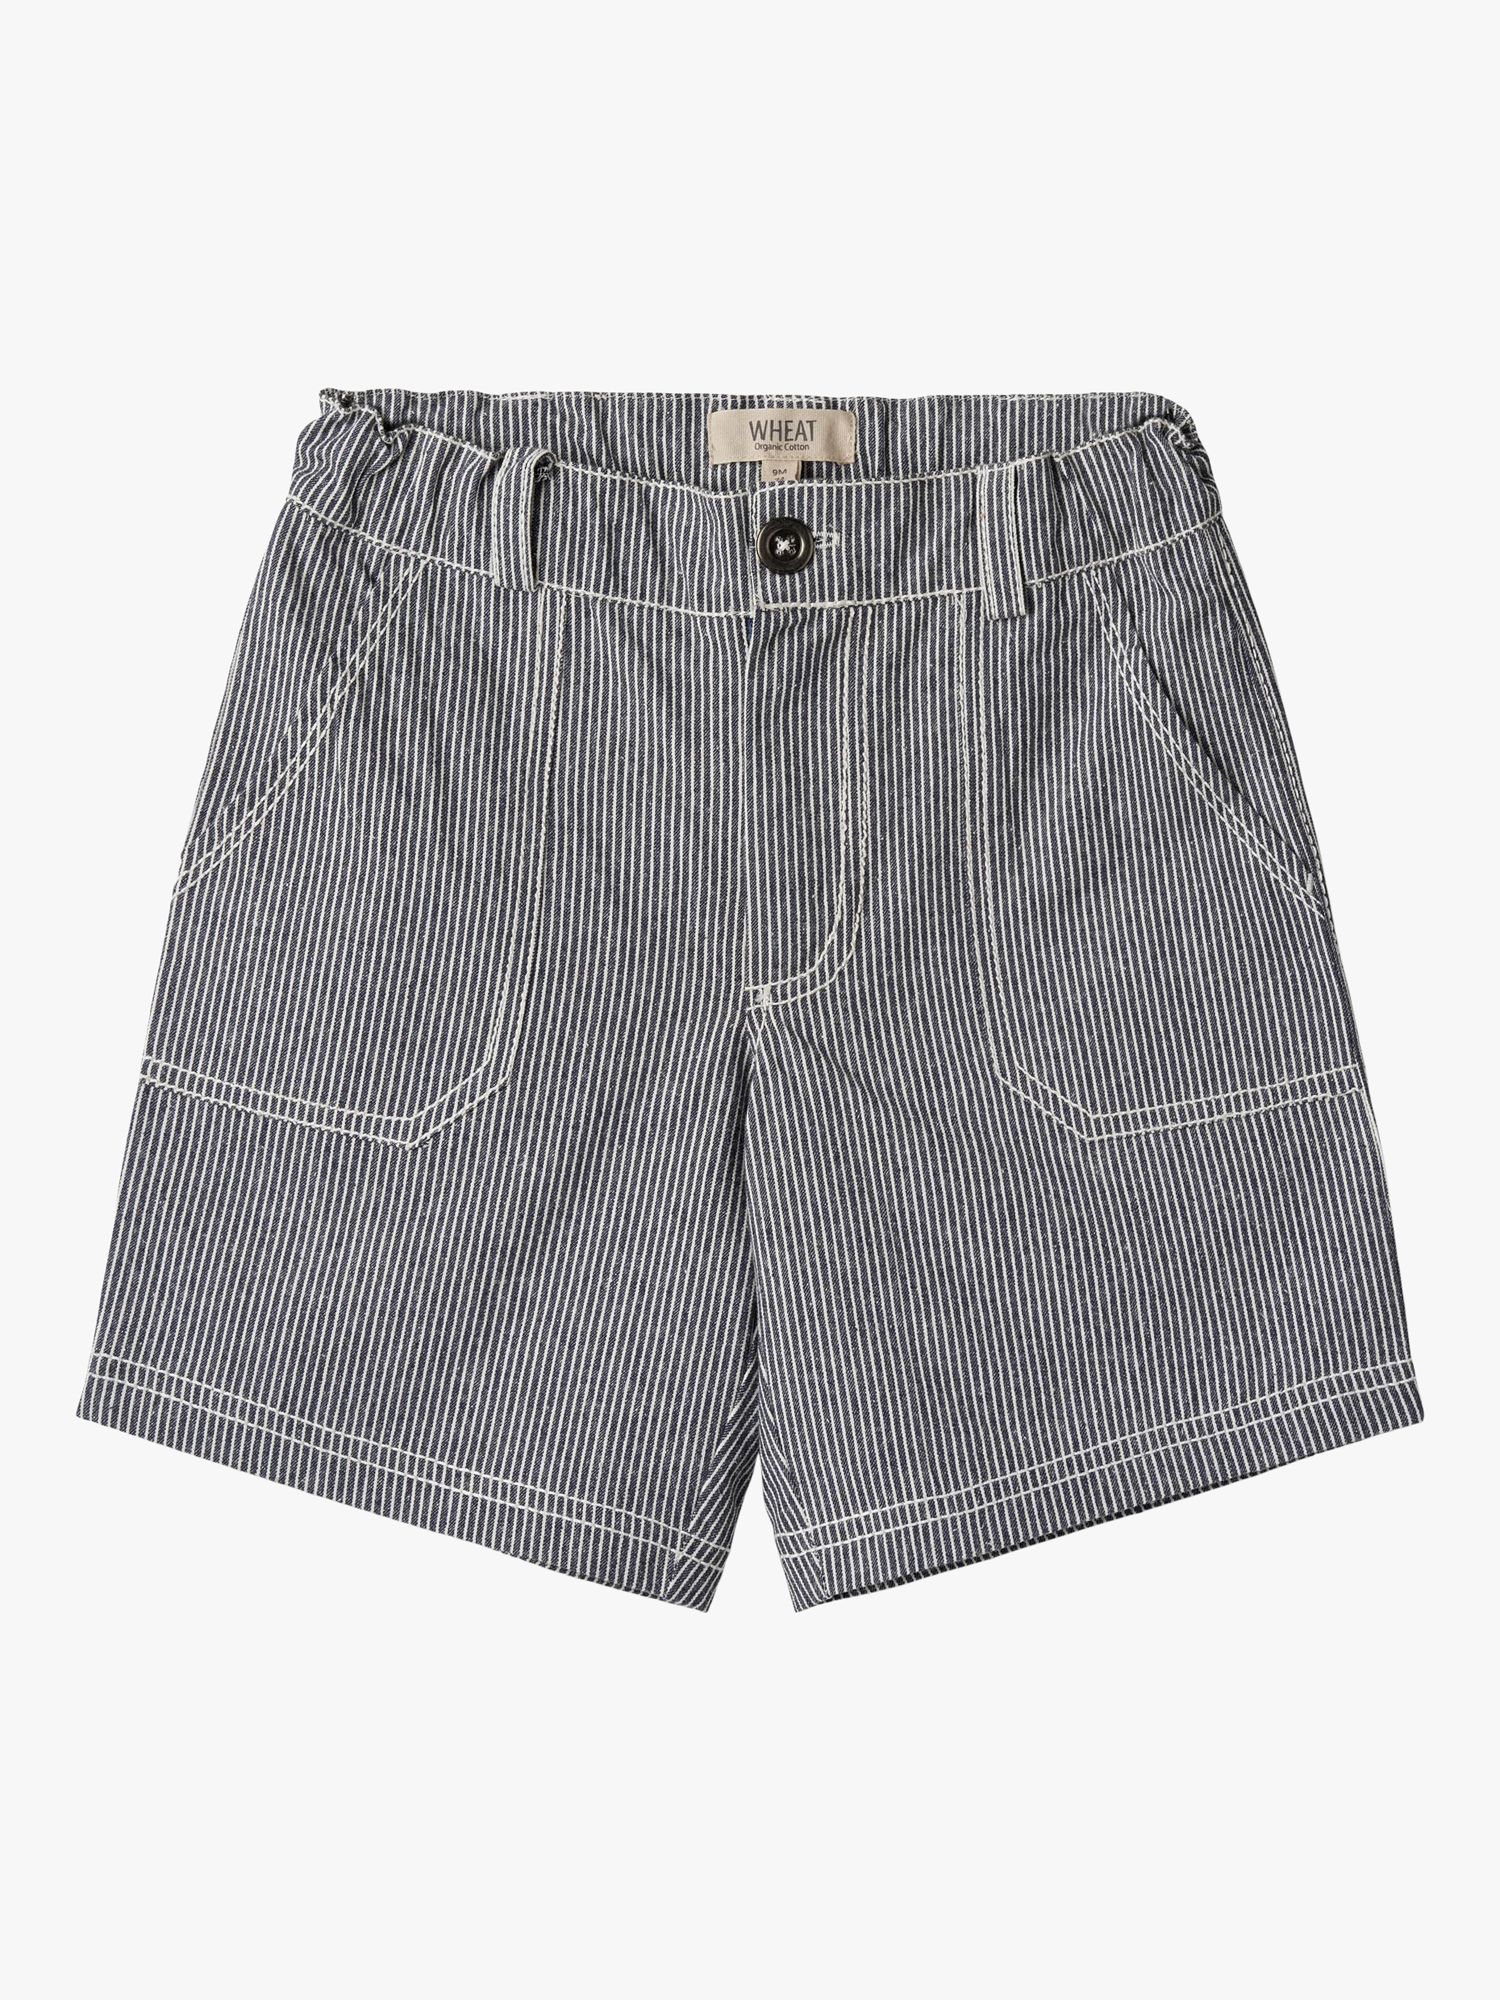 WHEAT Kids' Pelle Striped Shorts, Blue/White, 8 years